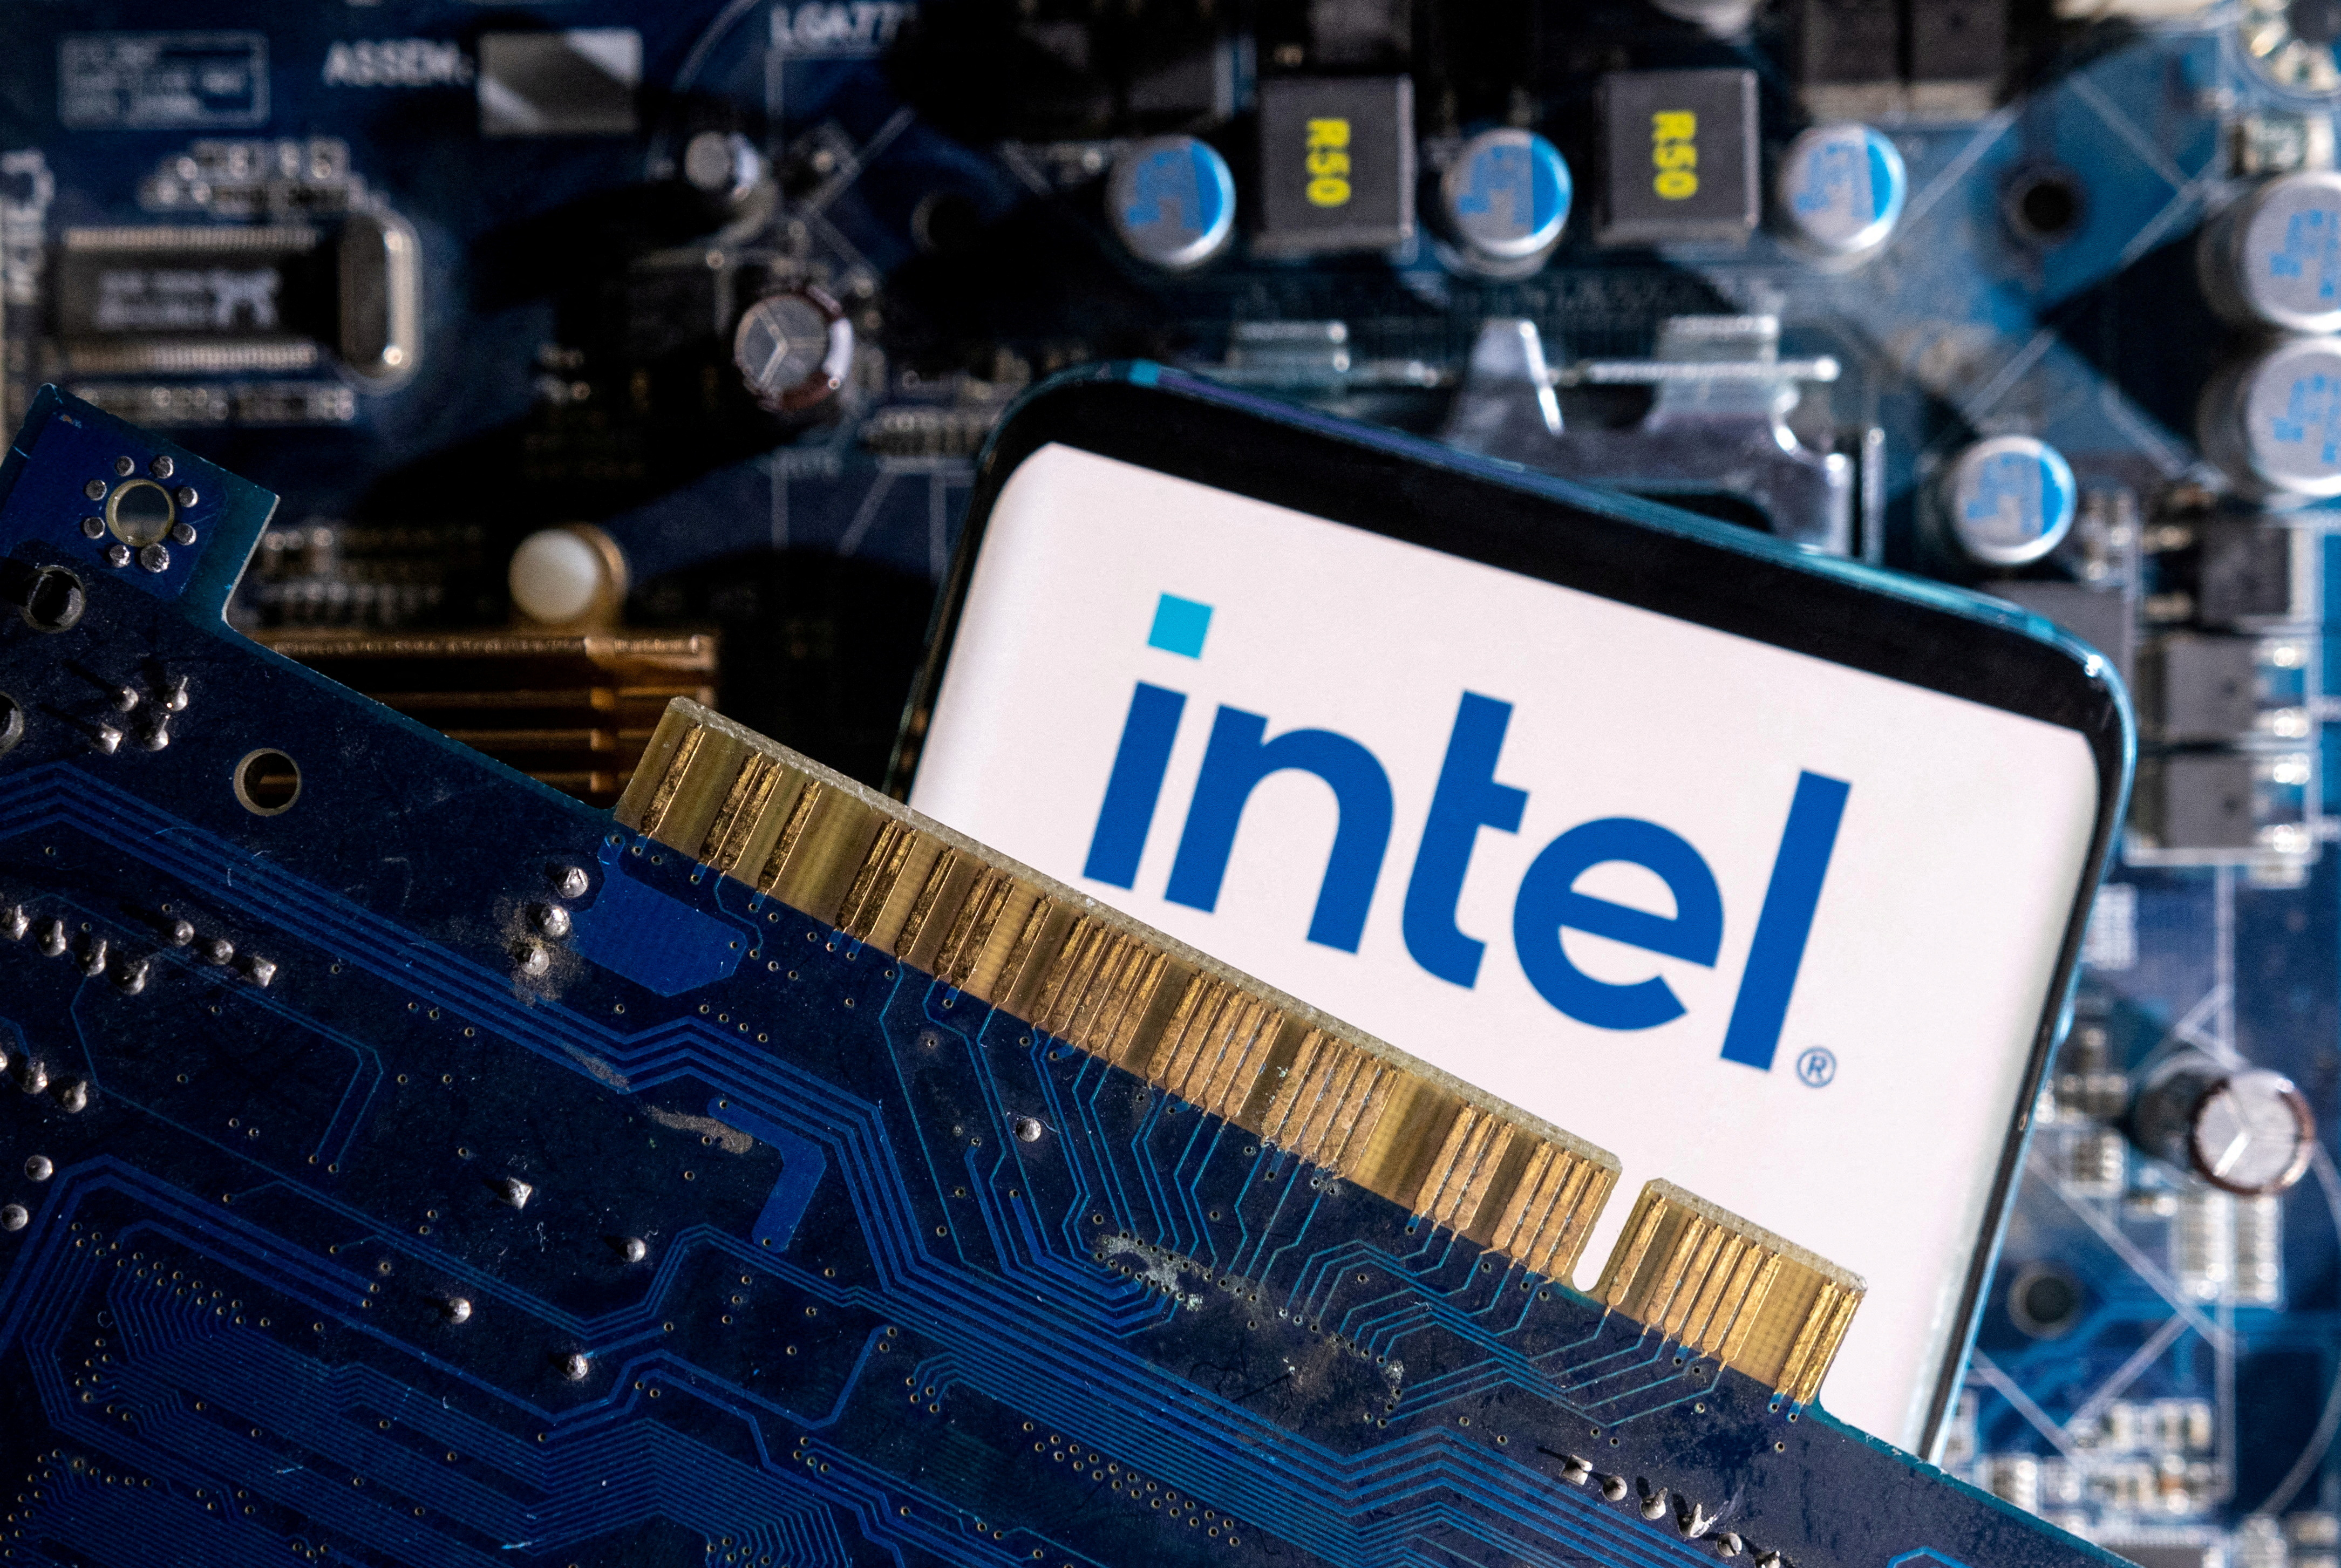 Illustration shows Intel logo